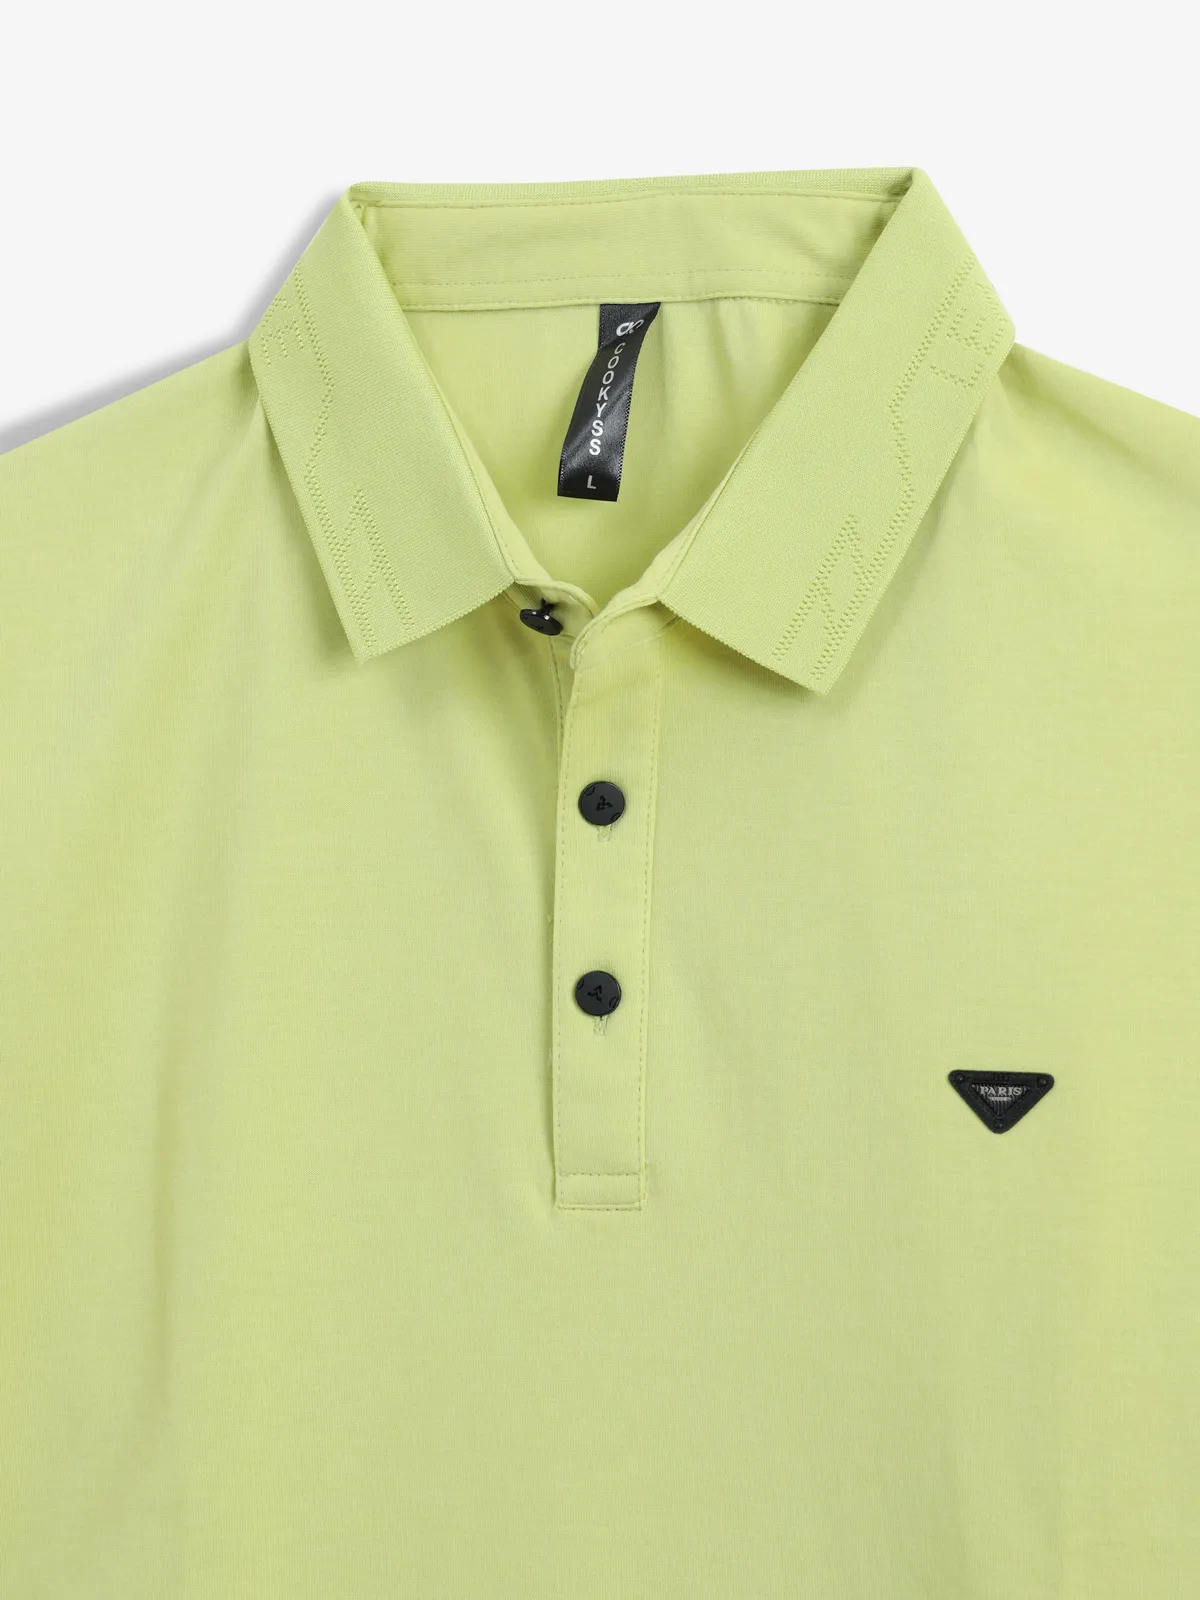 COOKYSS plain green polo t-shirt